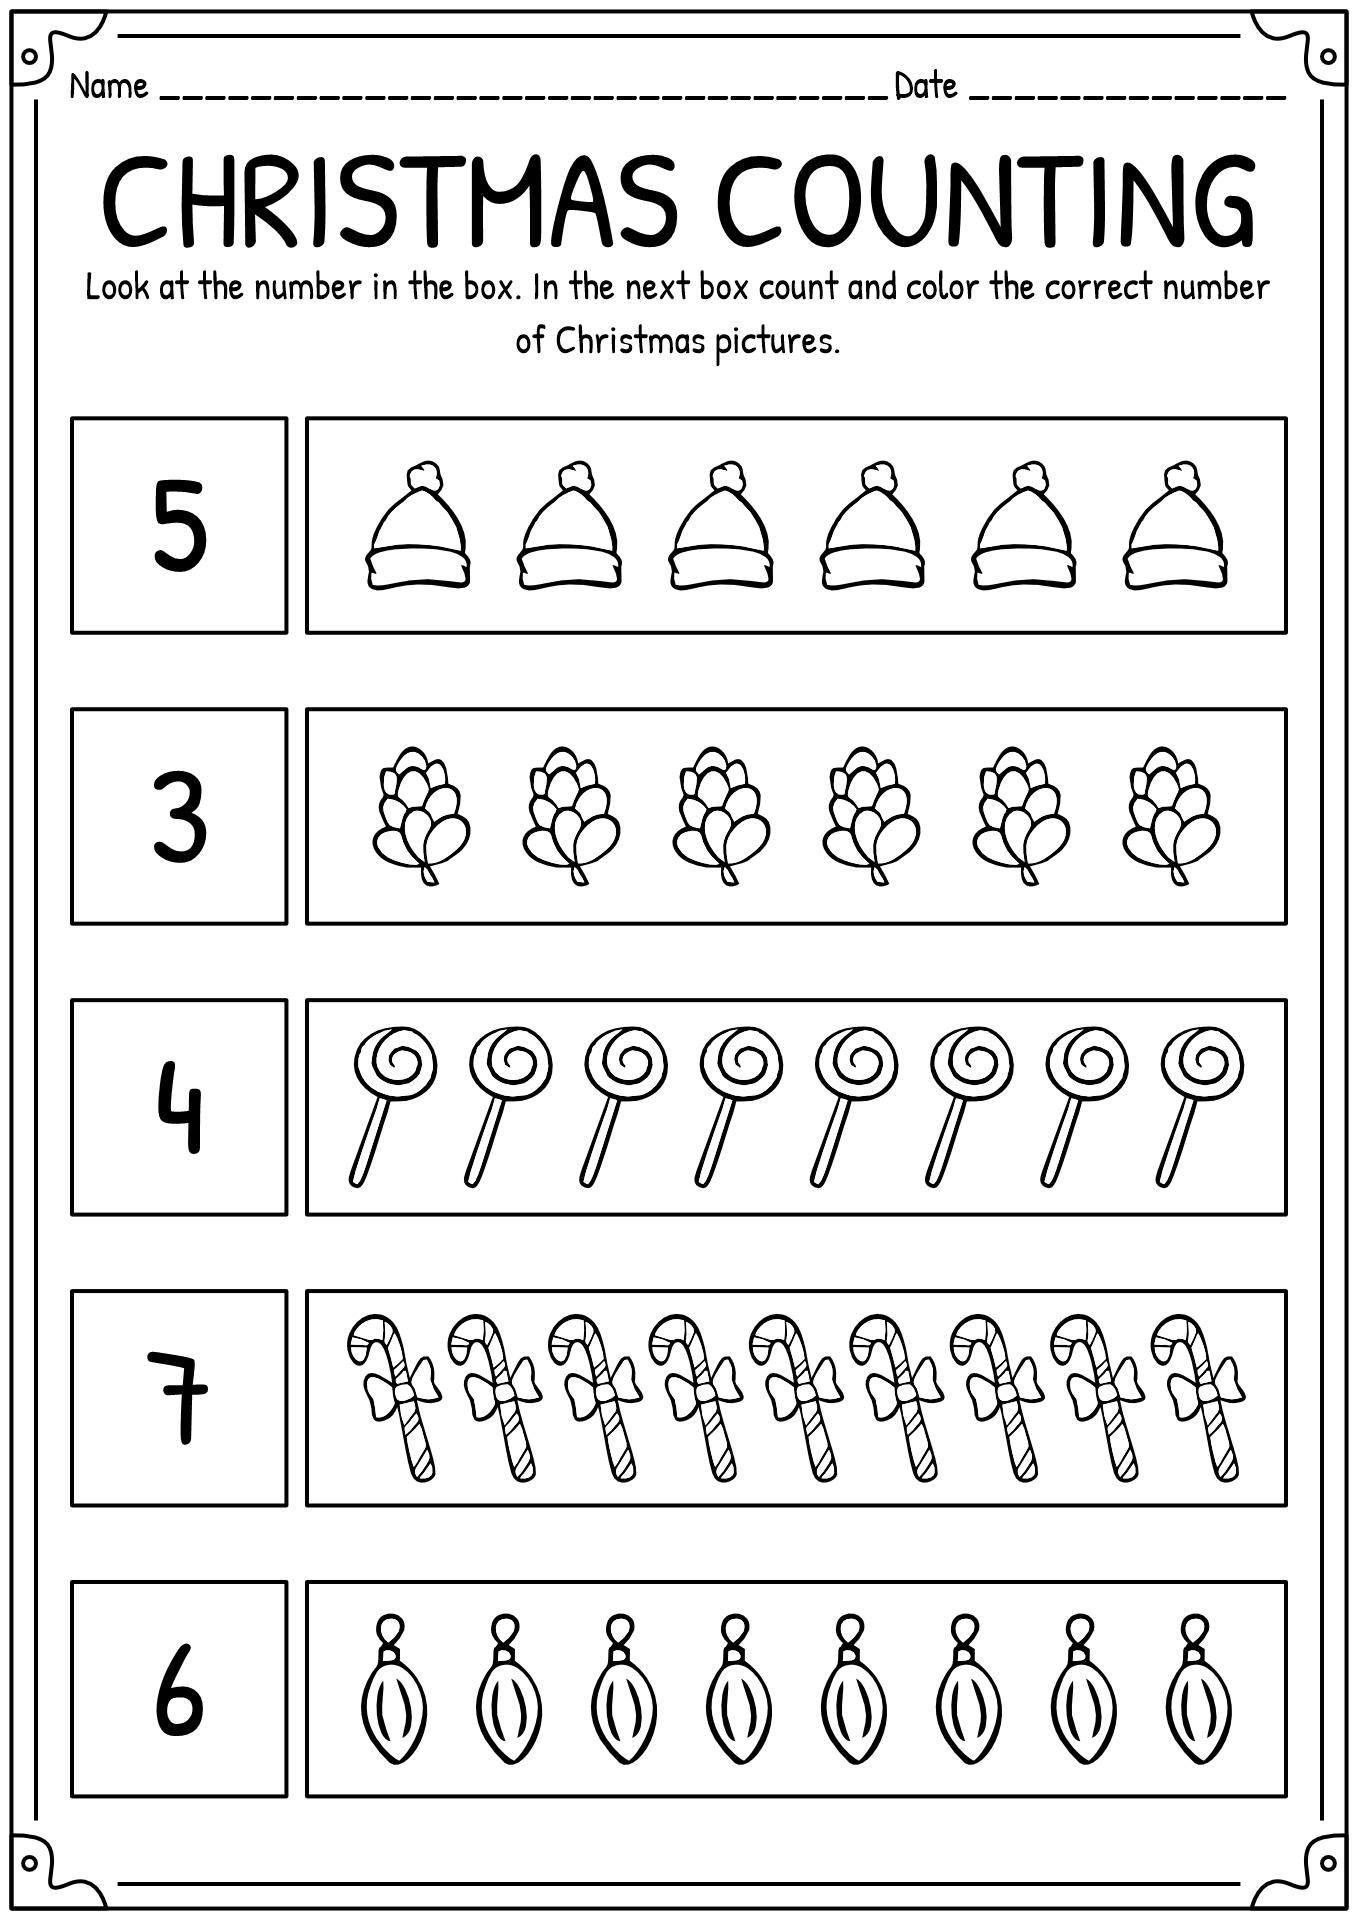 Kindergarten Christmas Worksheets Printables Image